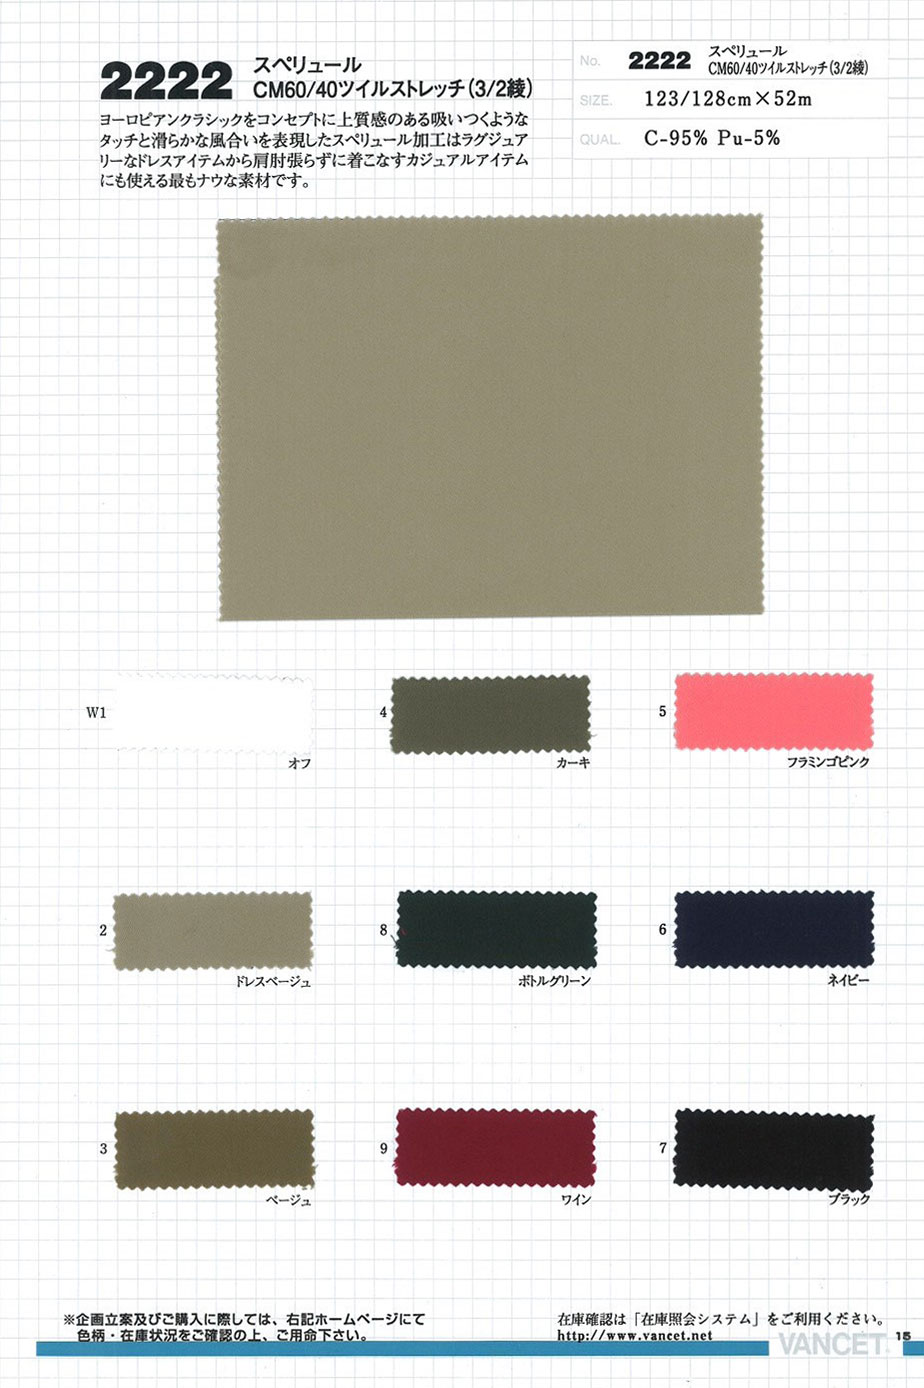 2222 Spellure CM60 / 40 Twill Stretch (3/2 Twill Weave)[Textile / Fabric] VANCET